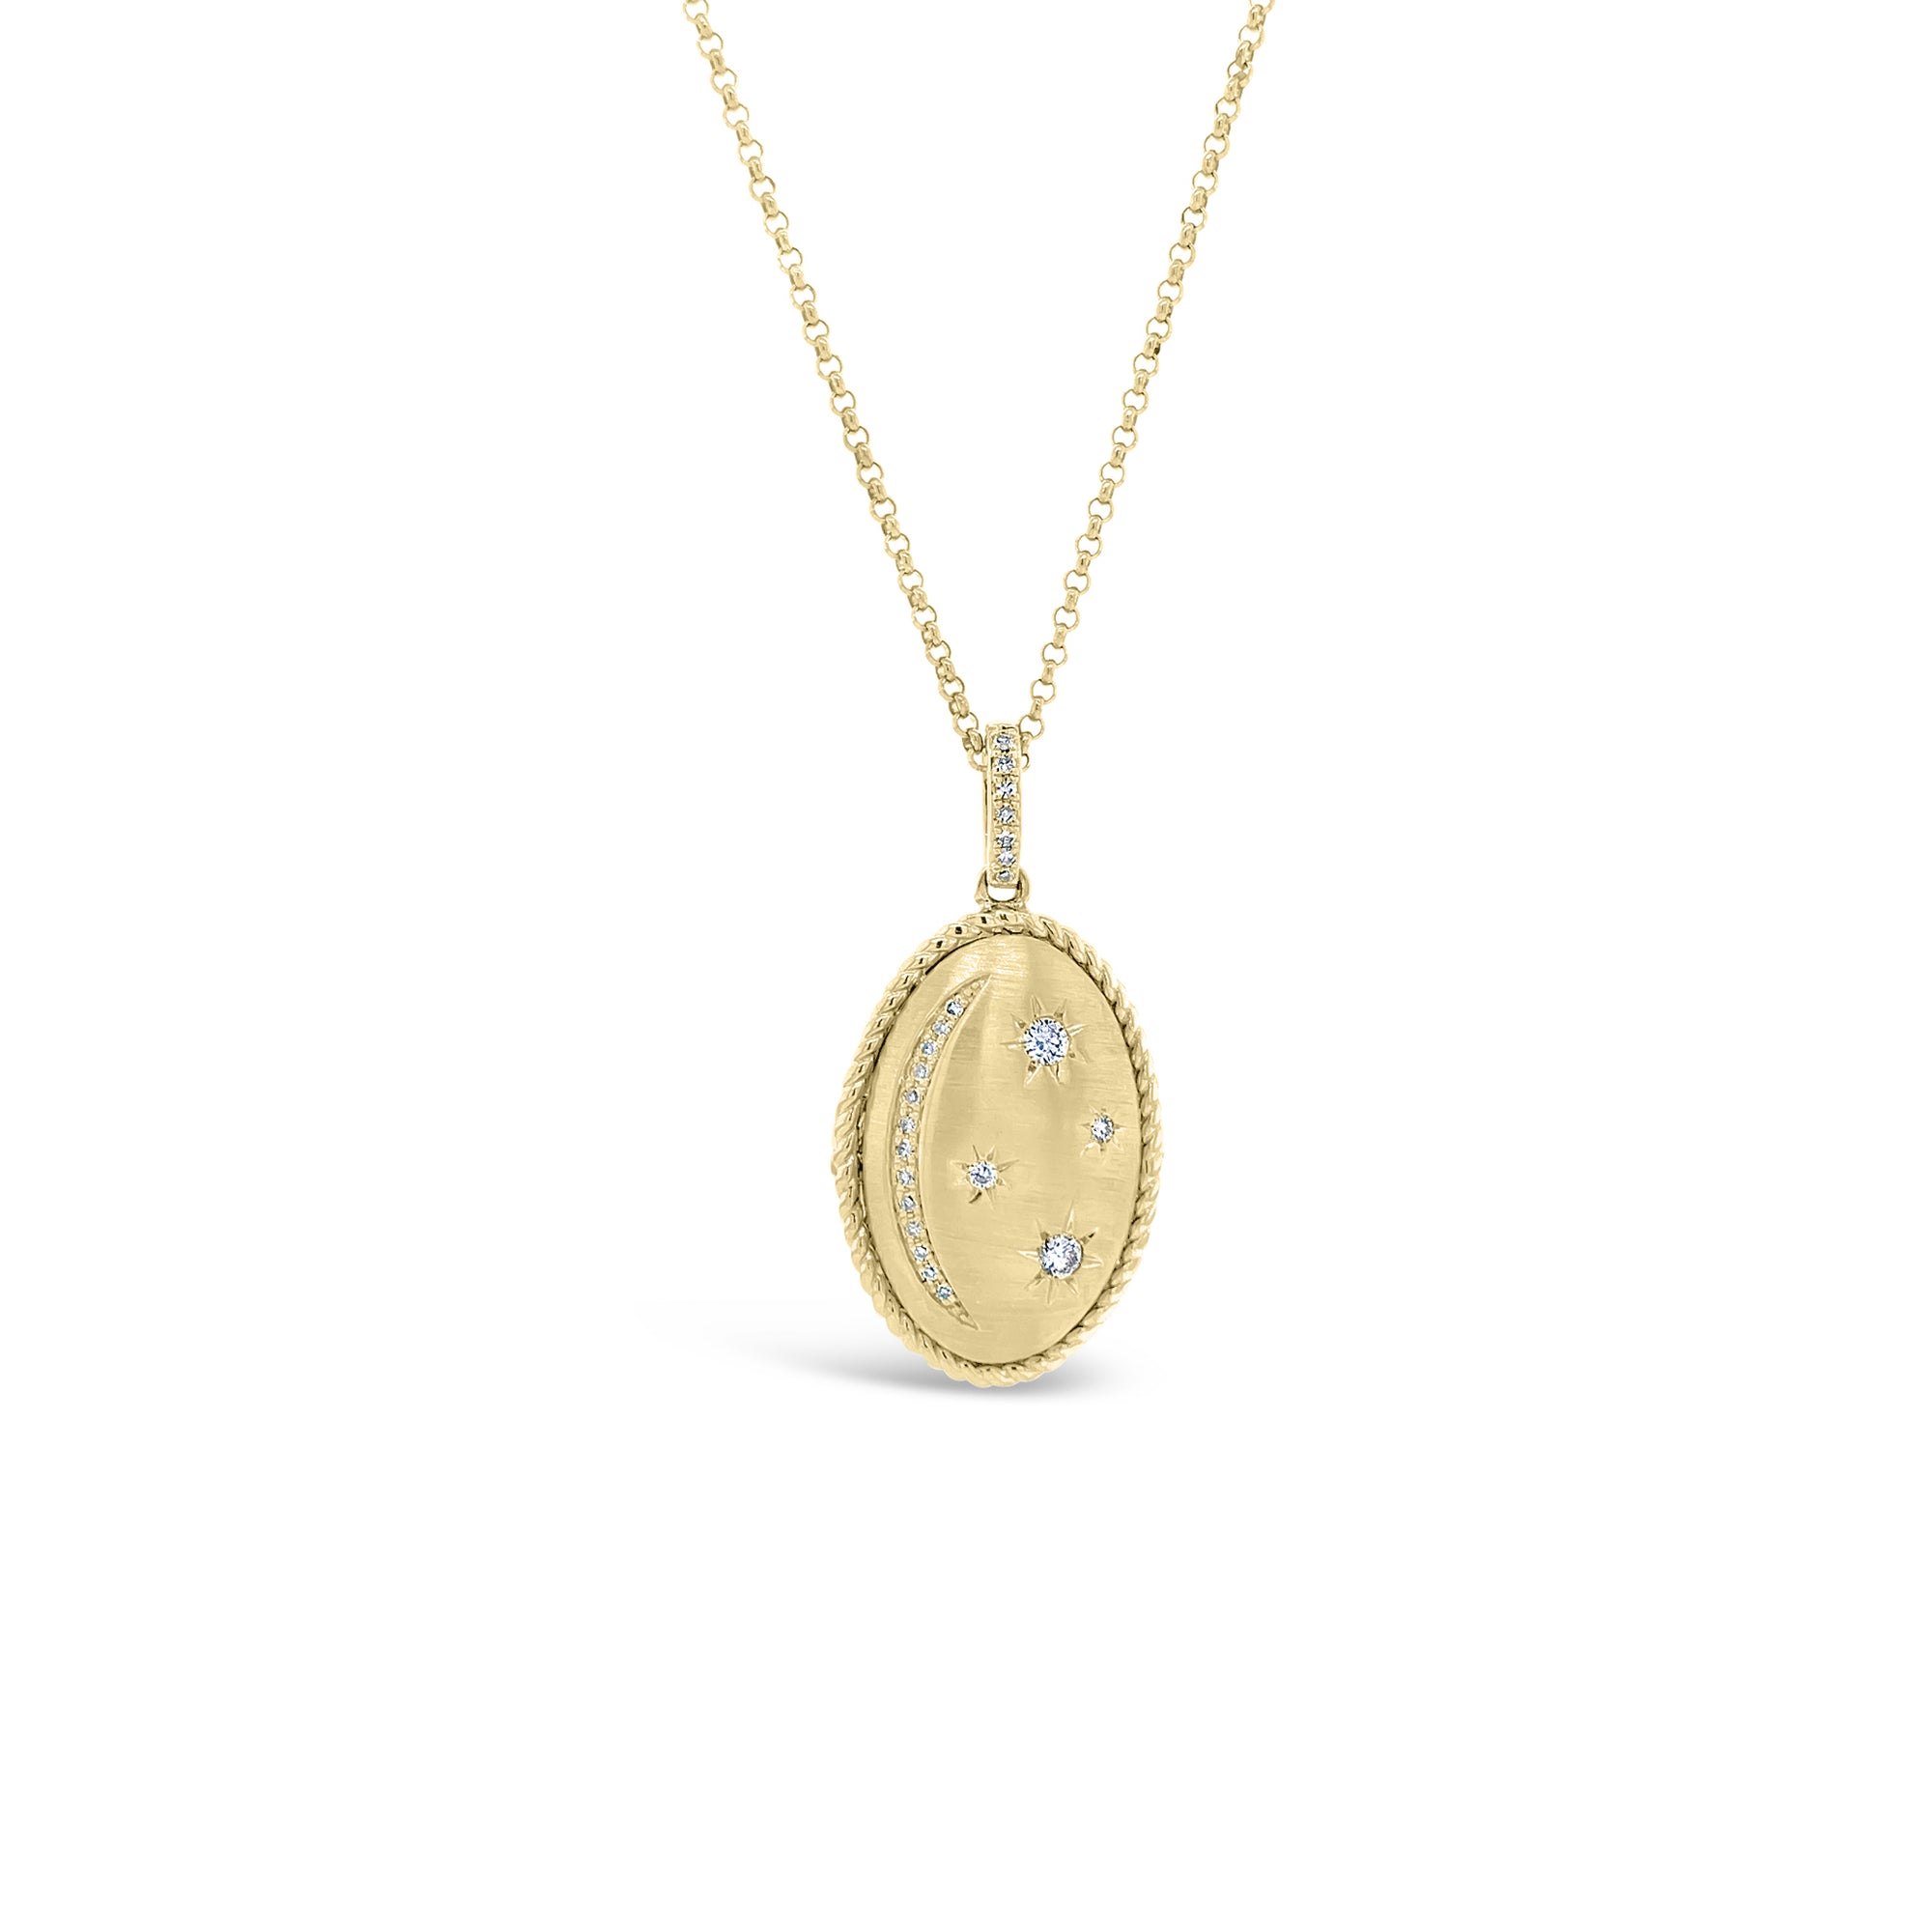 Diamond Celestial Locket Necklace -14K yellow gold weighing 4.88 grams -24 round diamonds totaling 0.11 carats